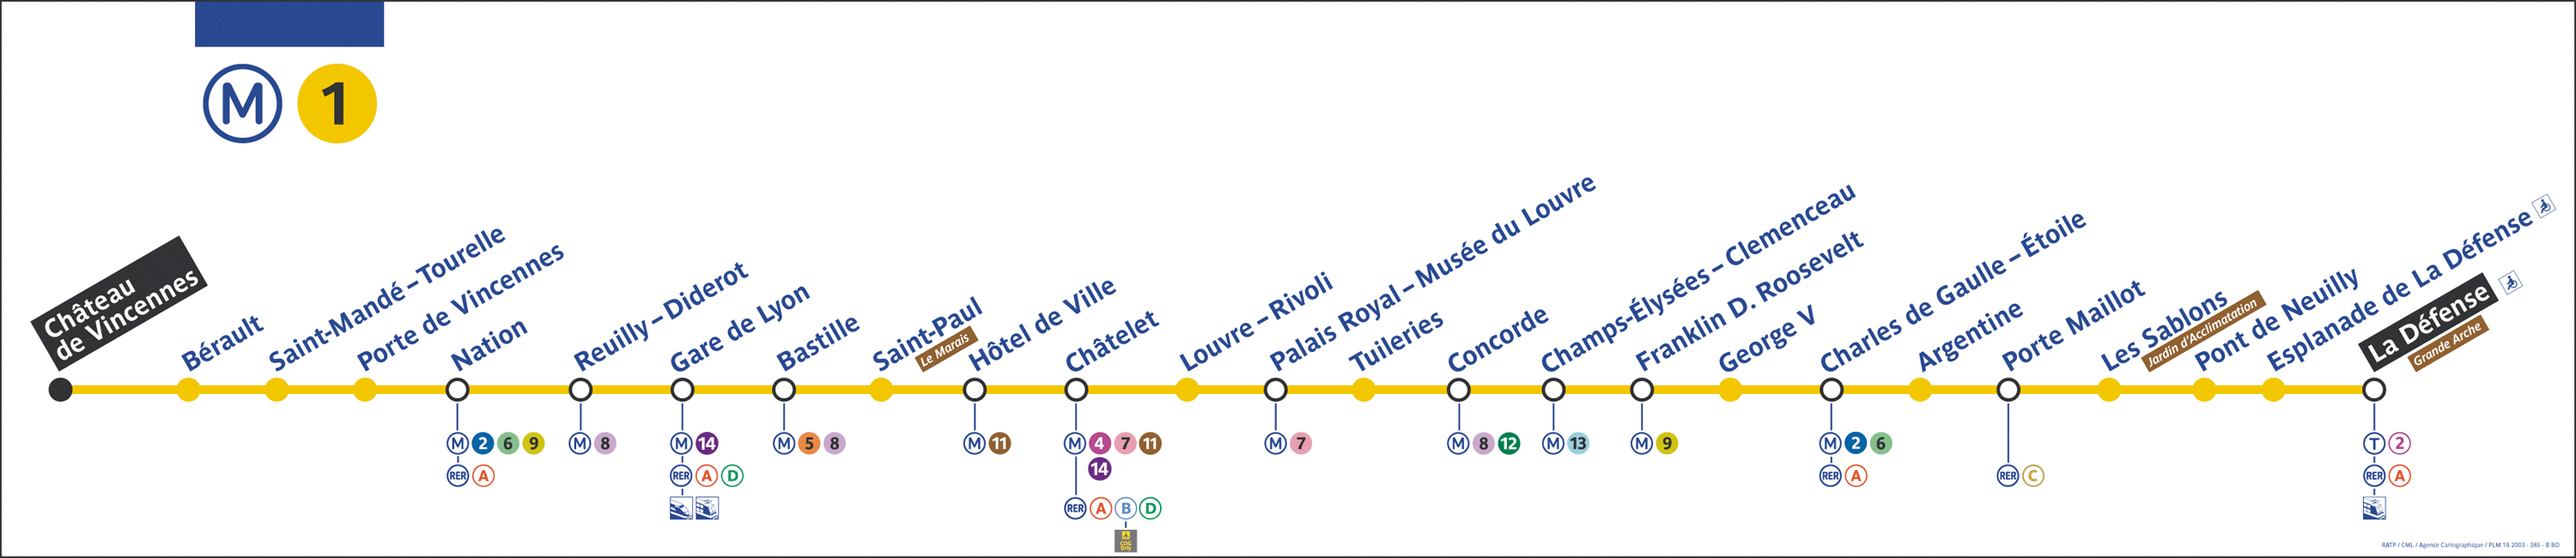 Métro Paris - ligne 1